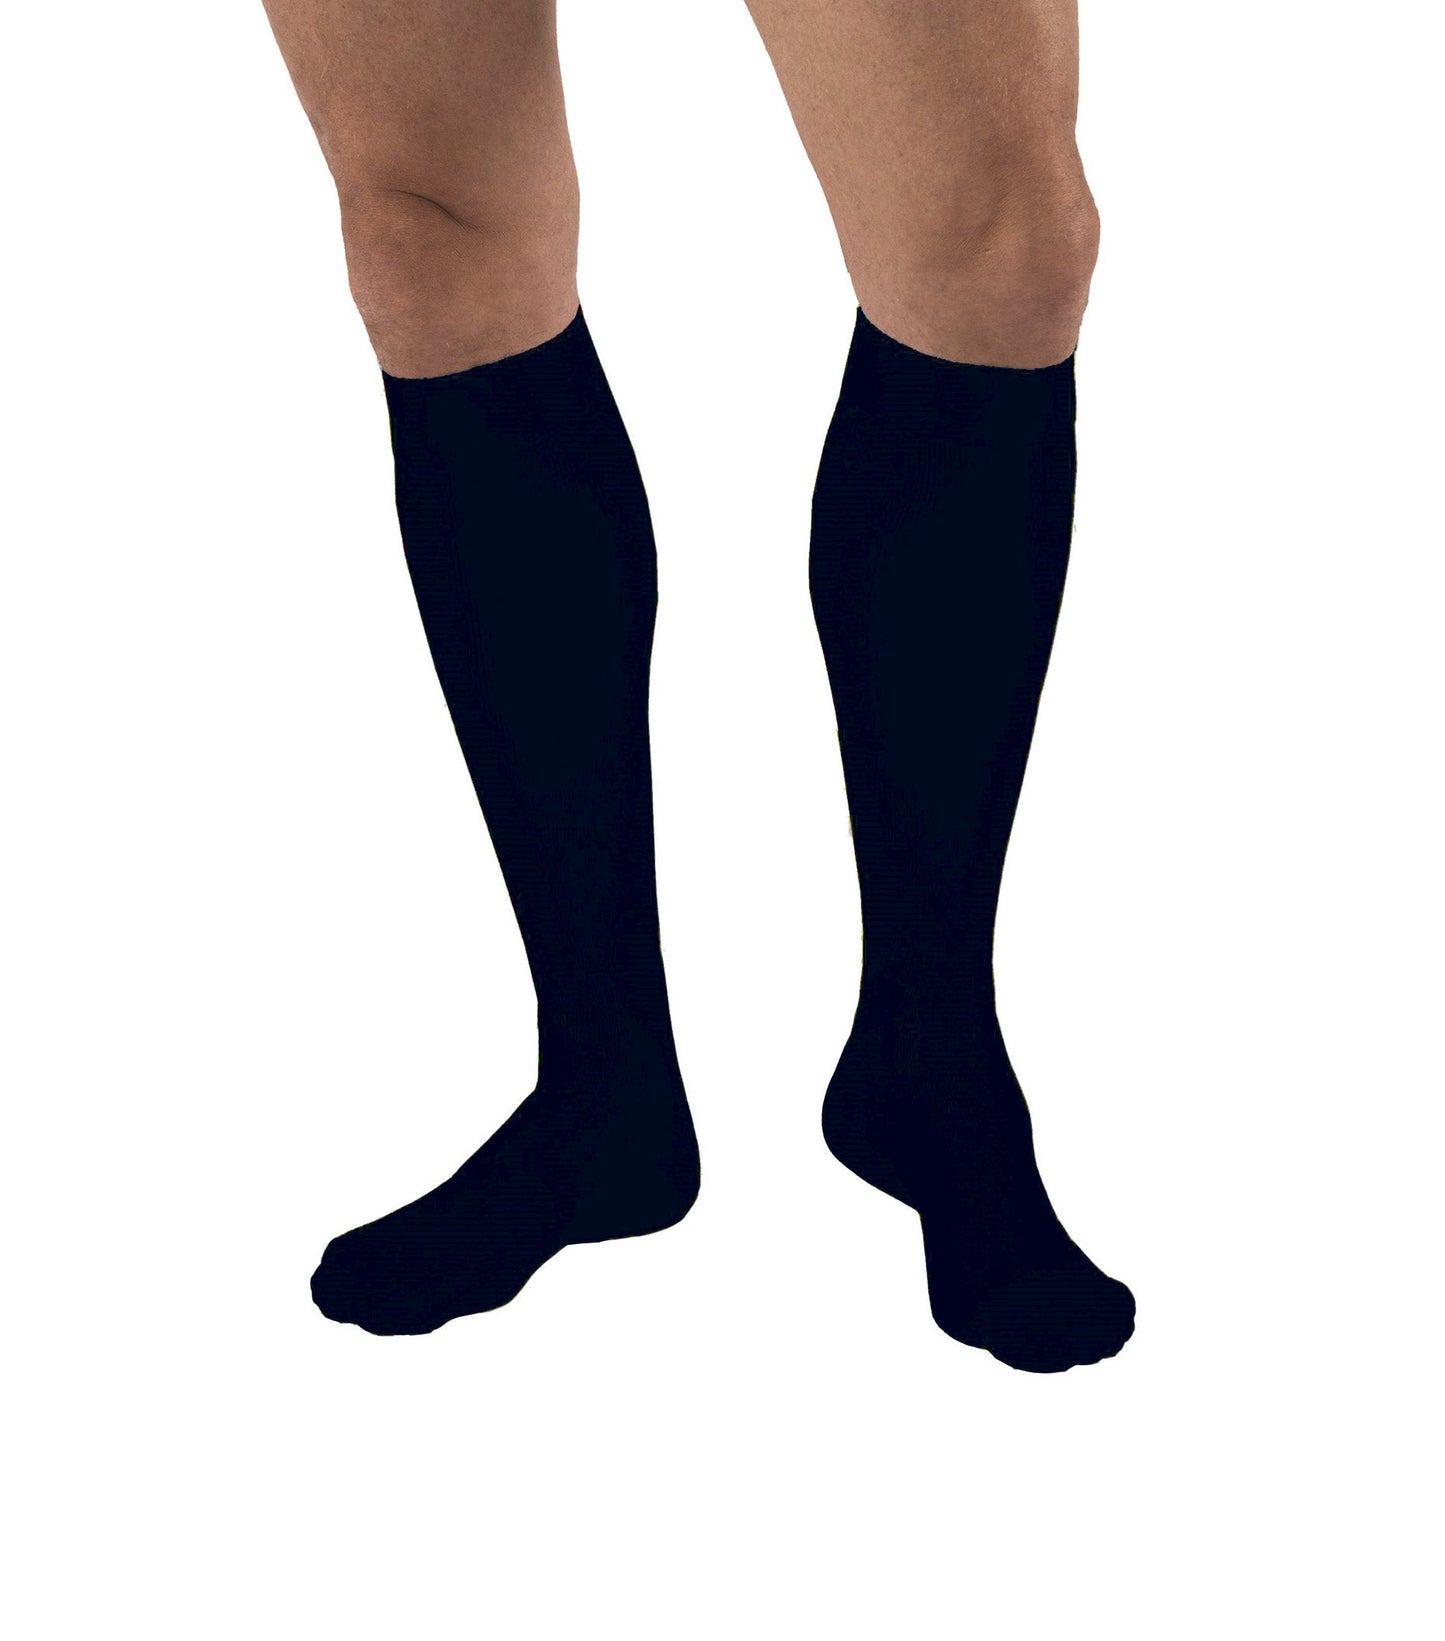 JOBST forMen Compression Socks 8-15  mmHg Knee High Closed Toe